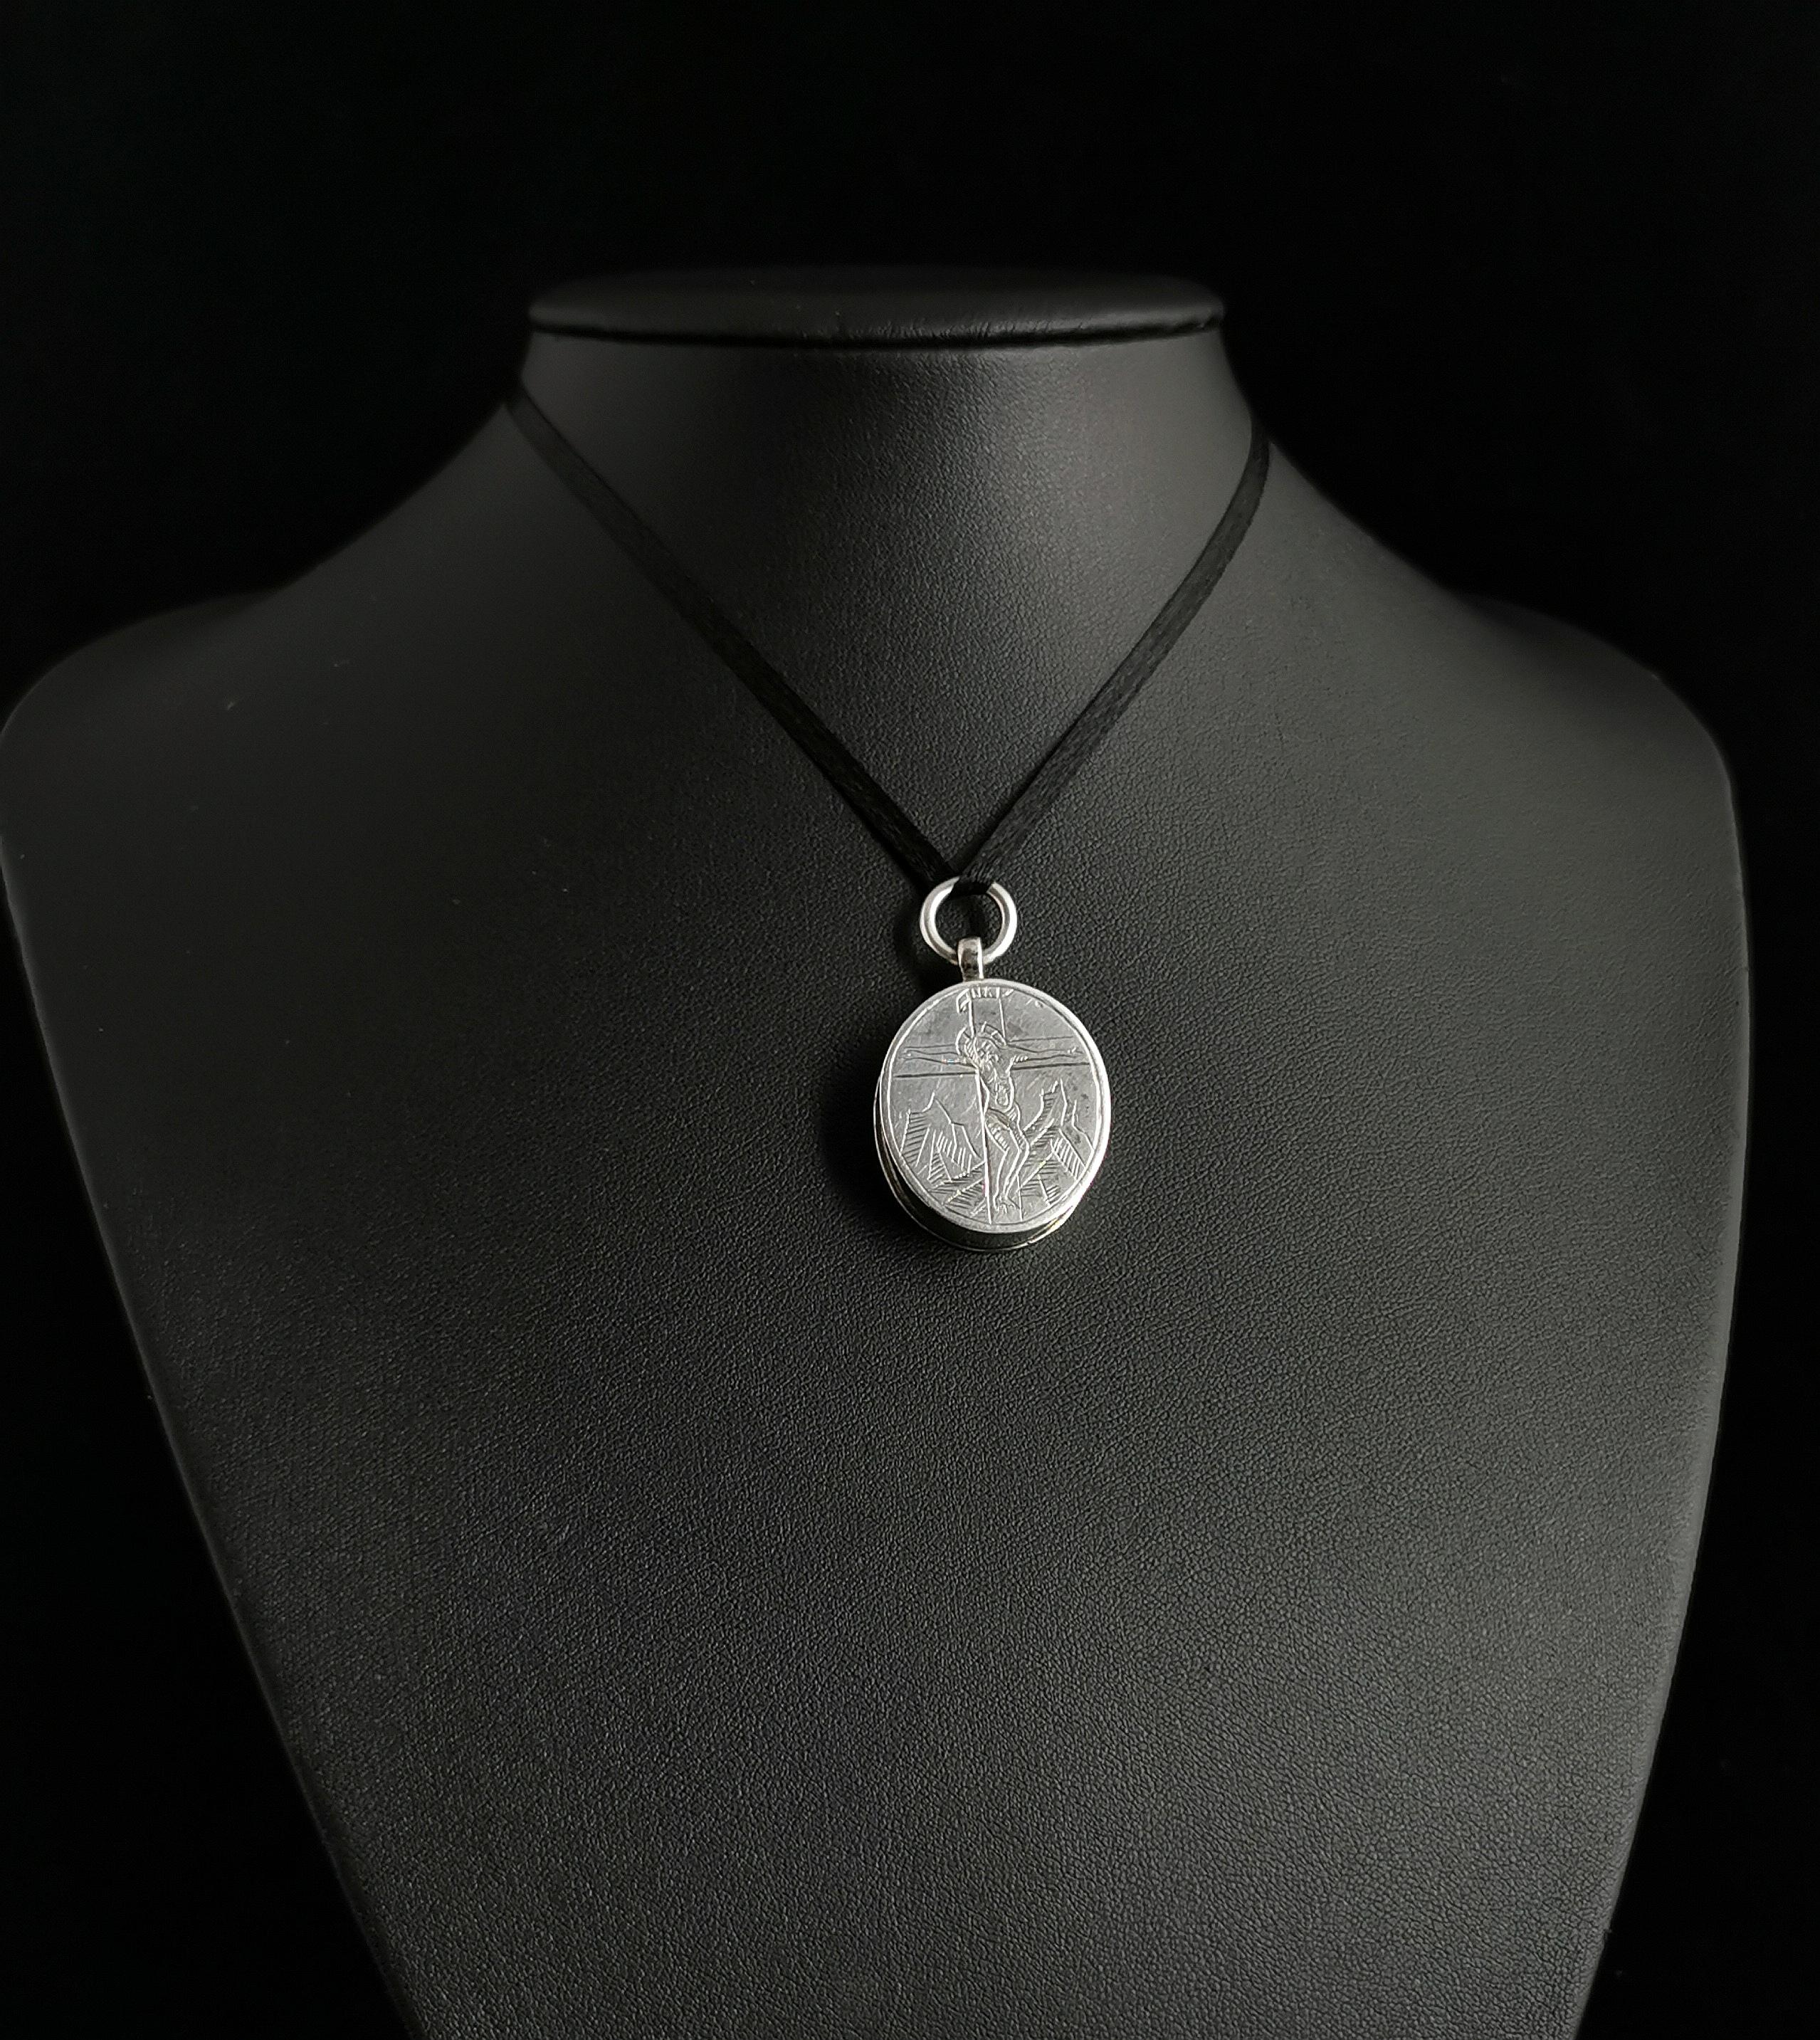 Antique Silver Reliquary Locket Pendant, Inri, Mourning, Religious For Sale 5